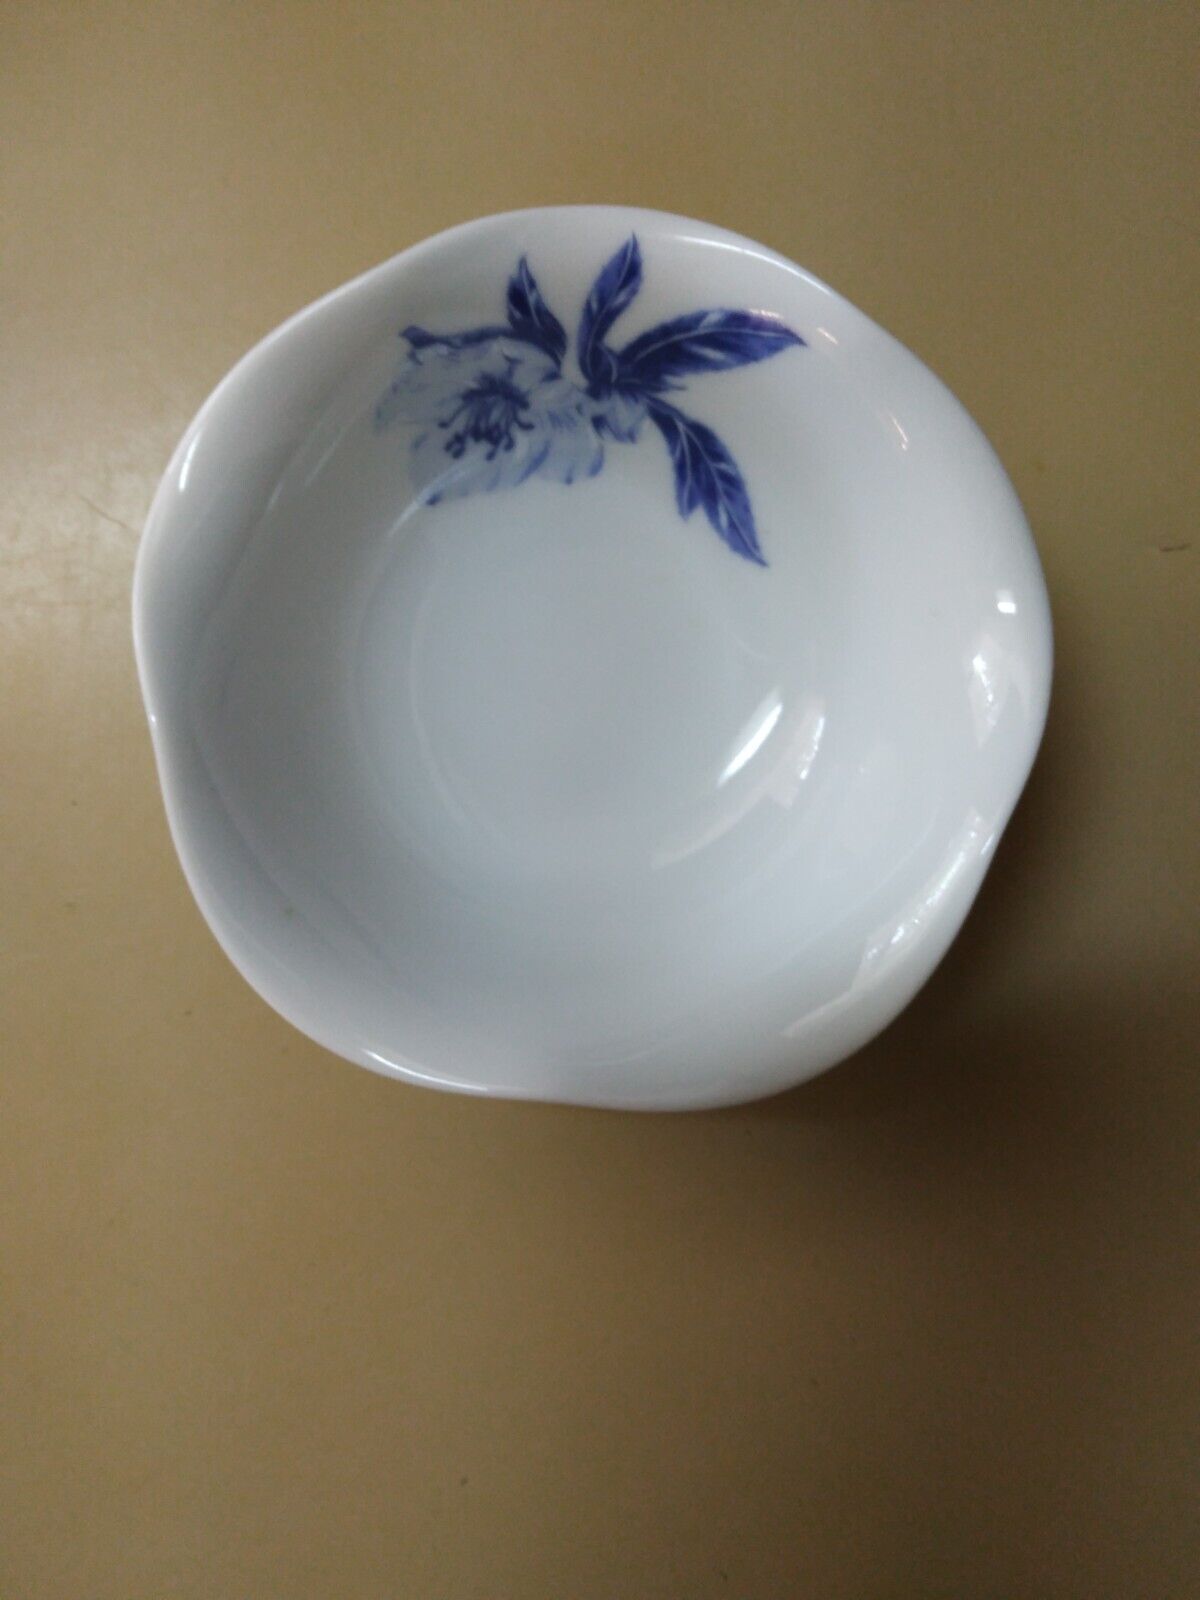 FUKAGAWA ARITA JAPAN SMALL BOWL WHITE BLUE FLOWER